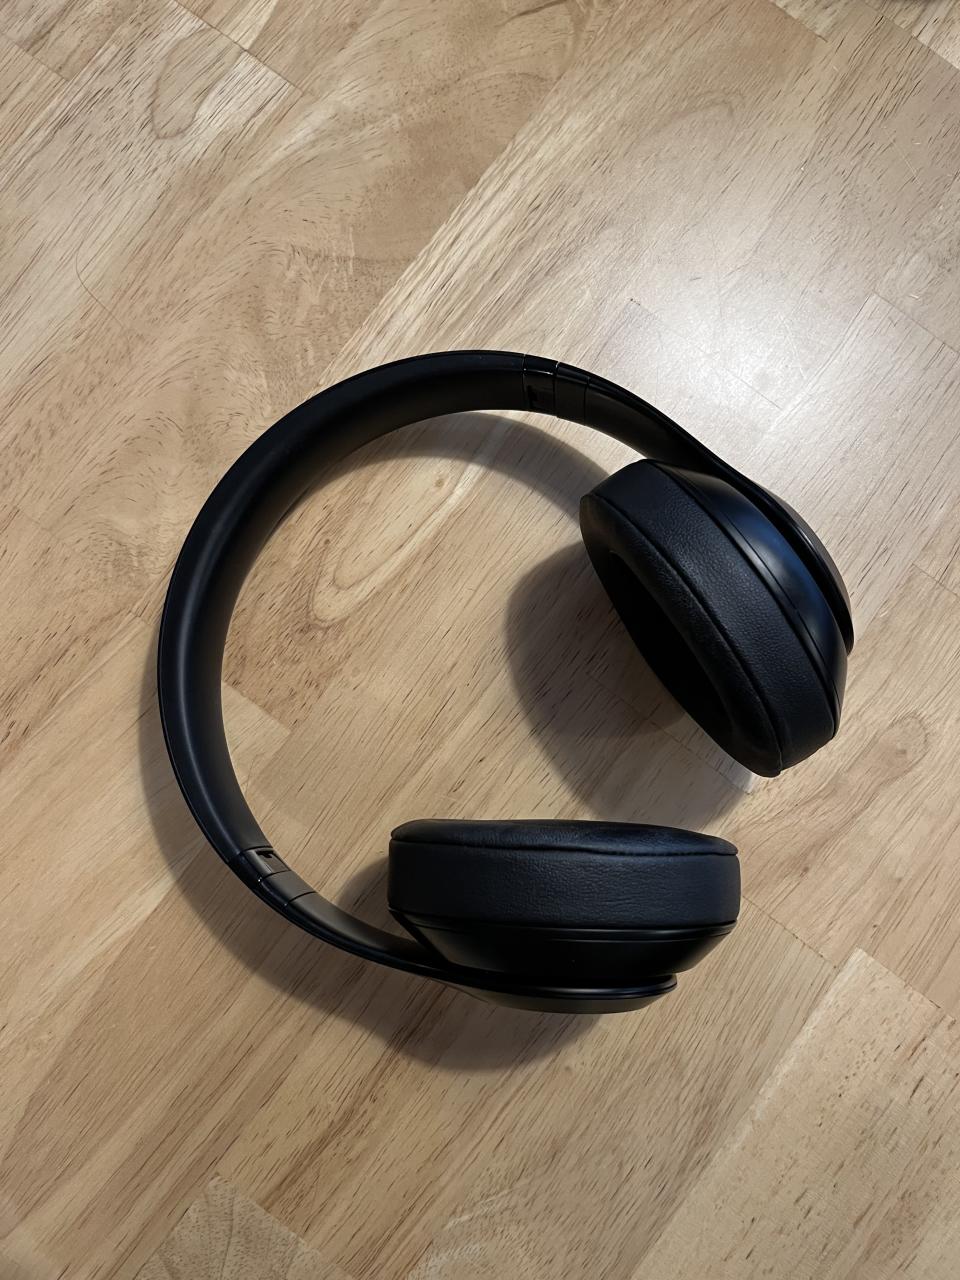 Beats Studio3 Wireless Over-Ear Headphones Review: Αυτά τα ακουστικά ακύρωσης θορύβου είναι εξαιρετικά για το γραφείο, αλλά έχω μερικές προτάσεις (φωτογραφία συγγραφέα).